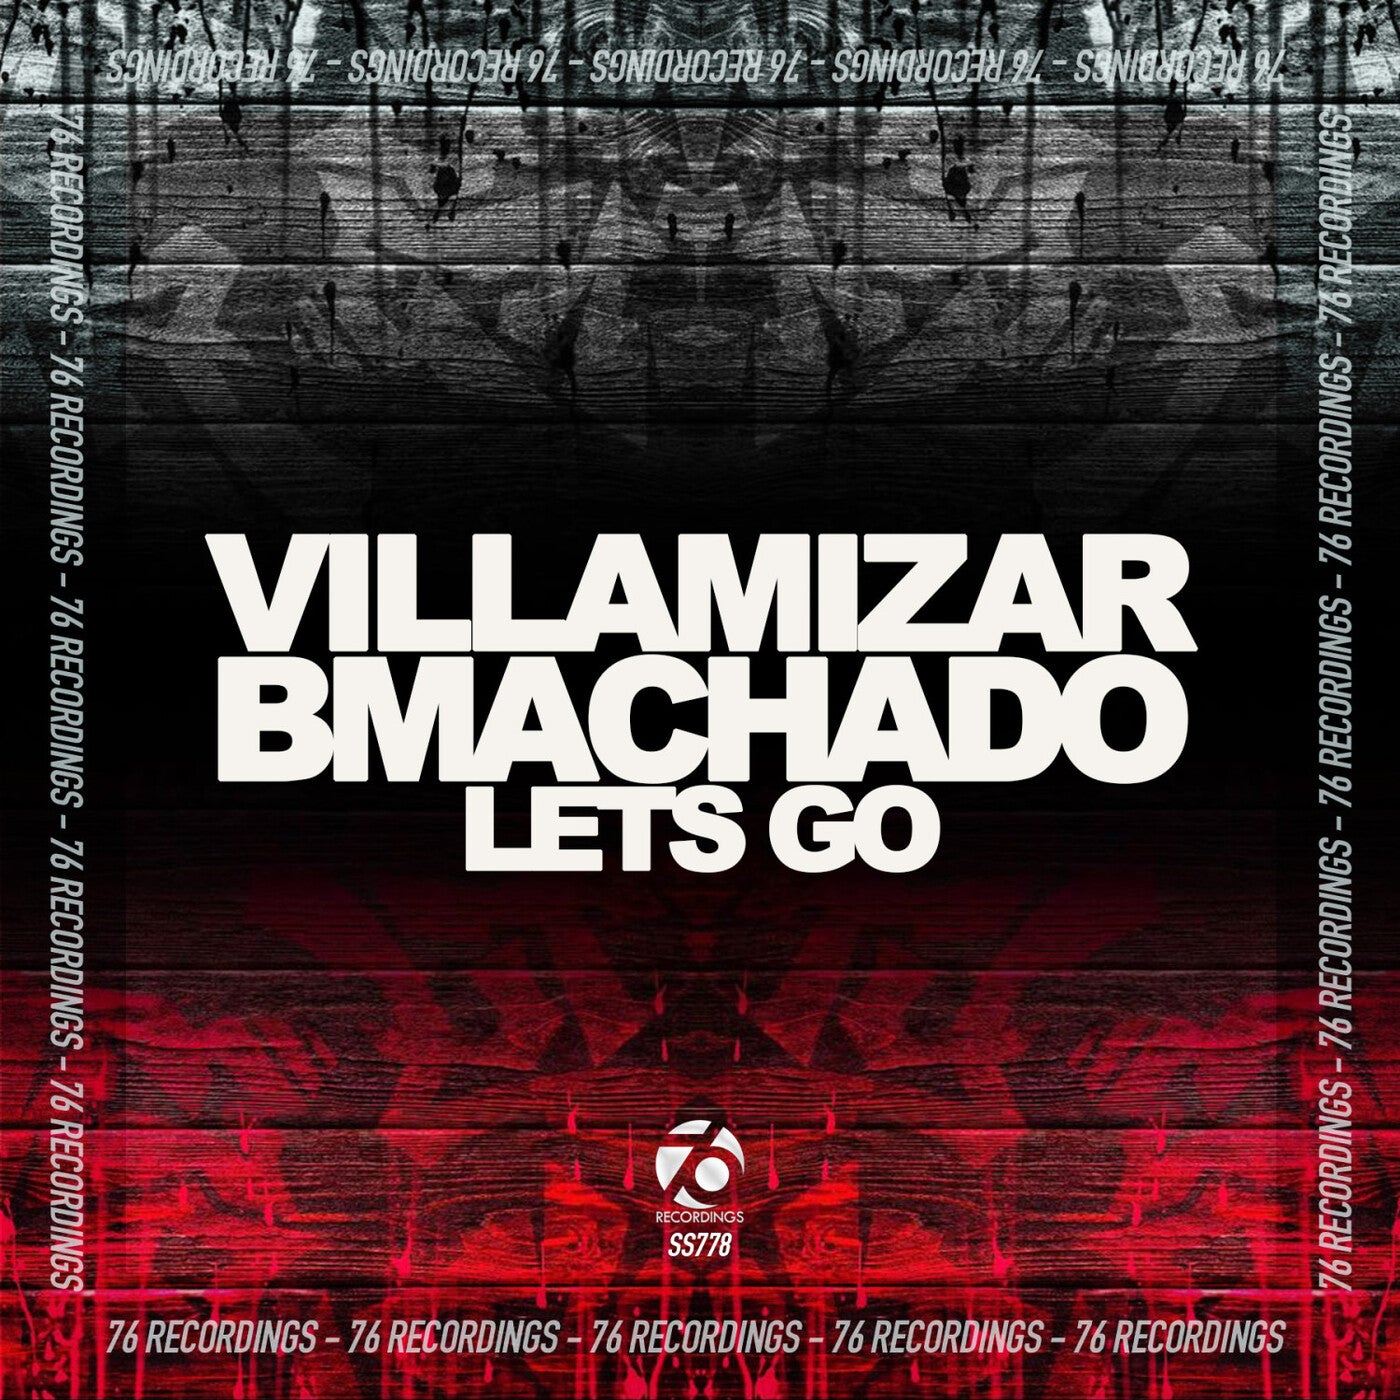 image cover: Villamizar, BMachado - Lets Go on 76 Recordings